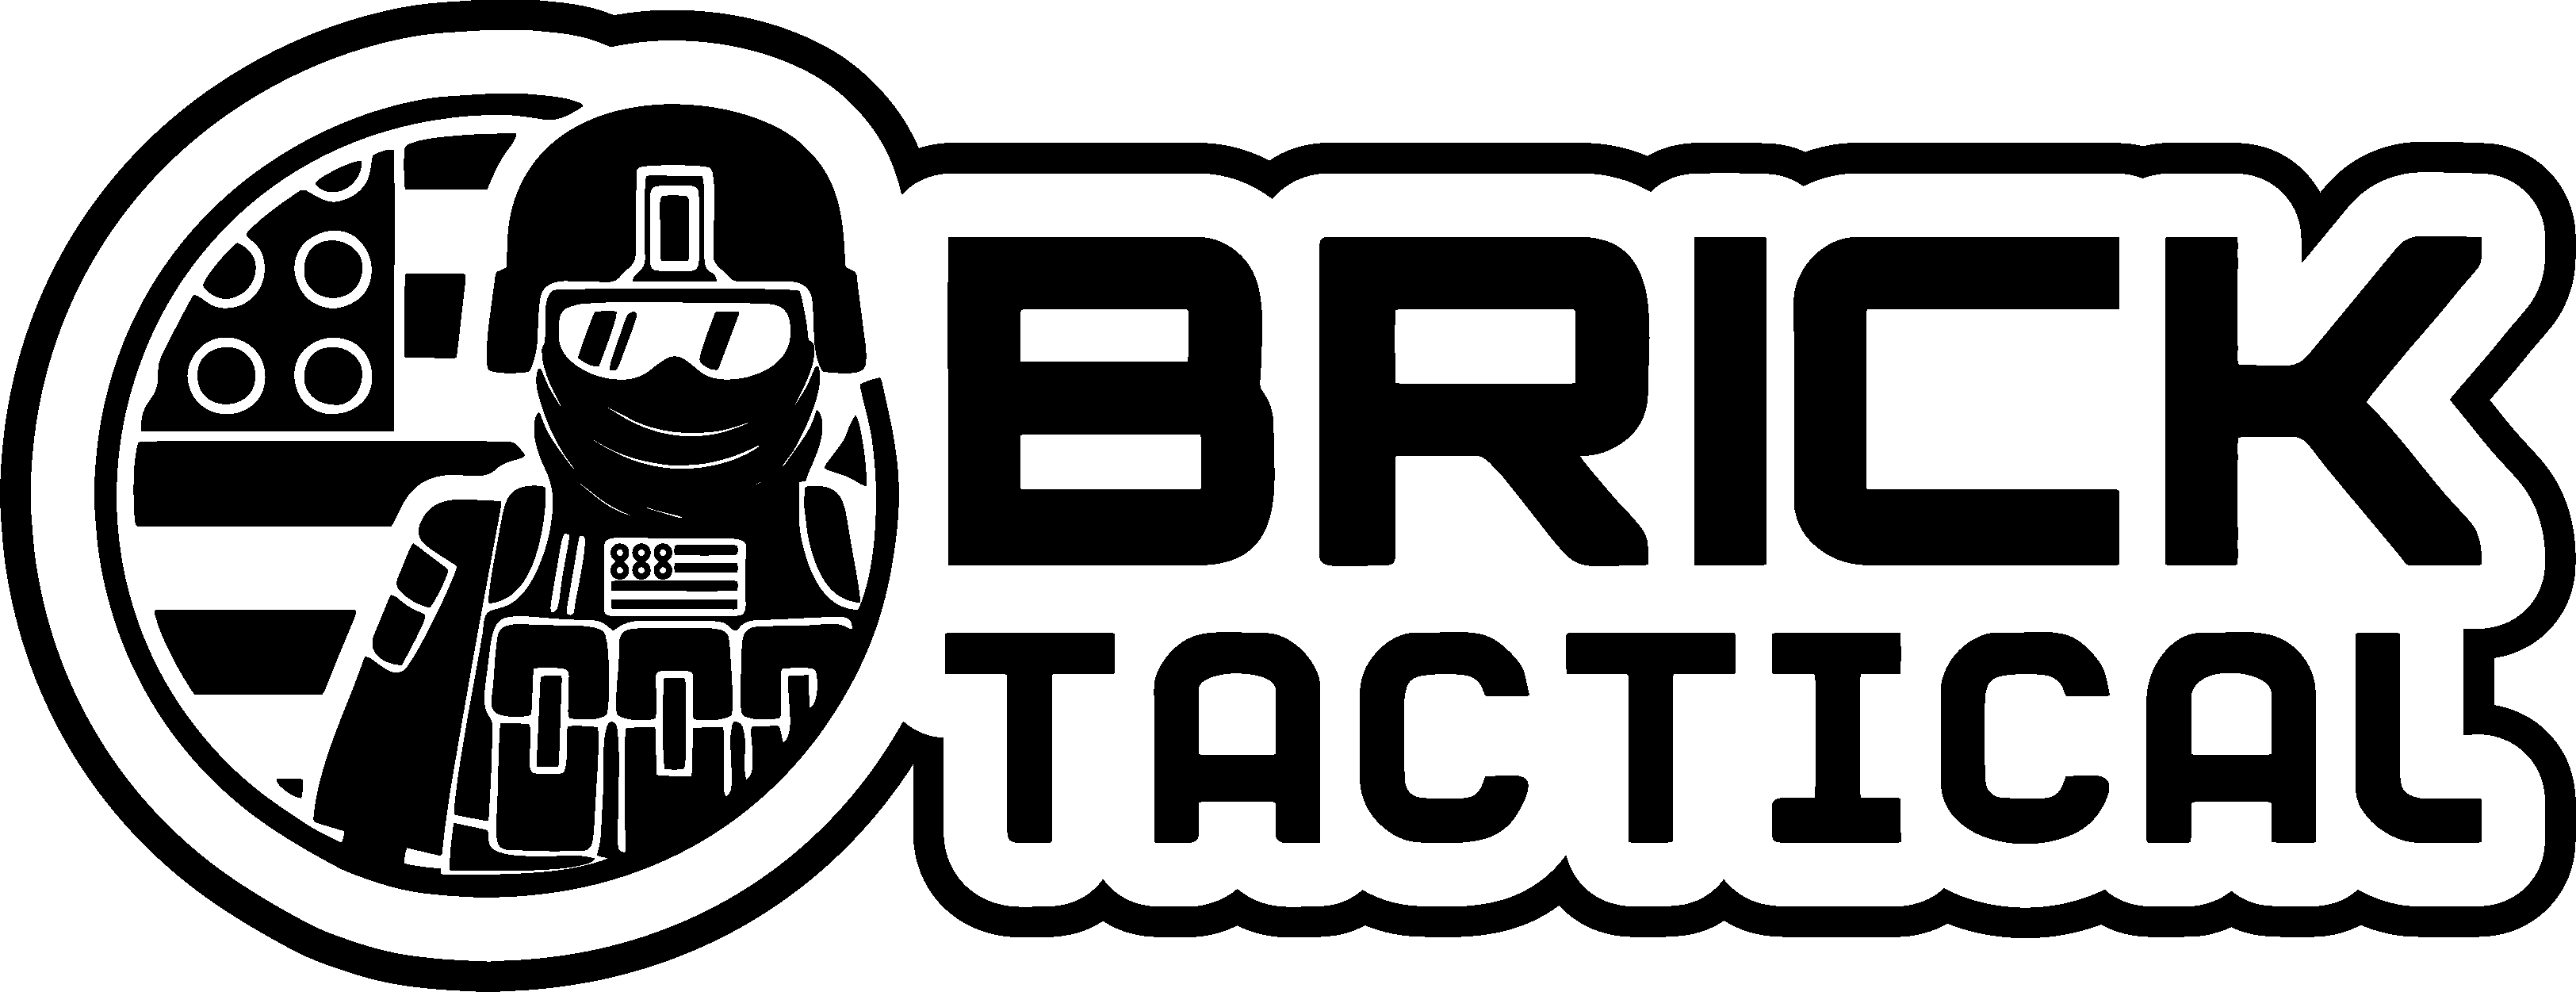 Brick Tactical : Brand Short Description Type Here.